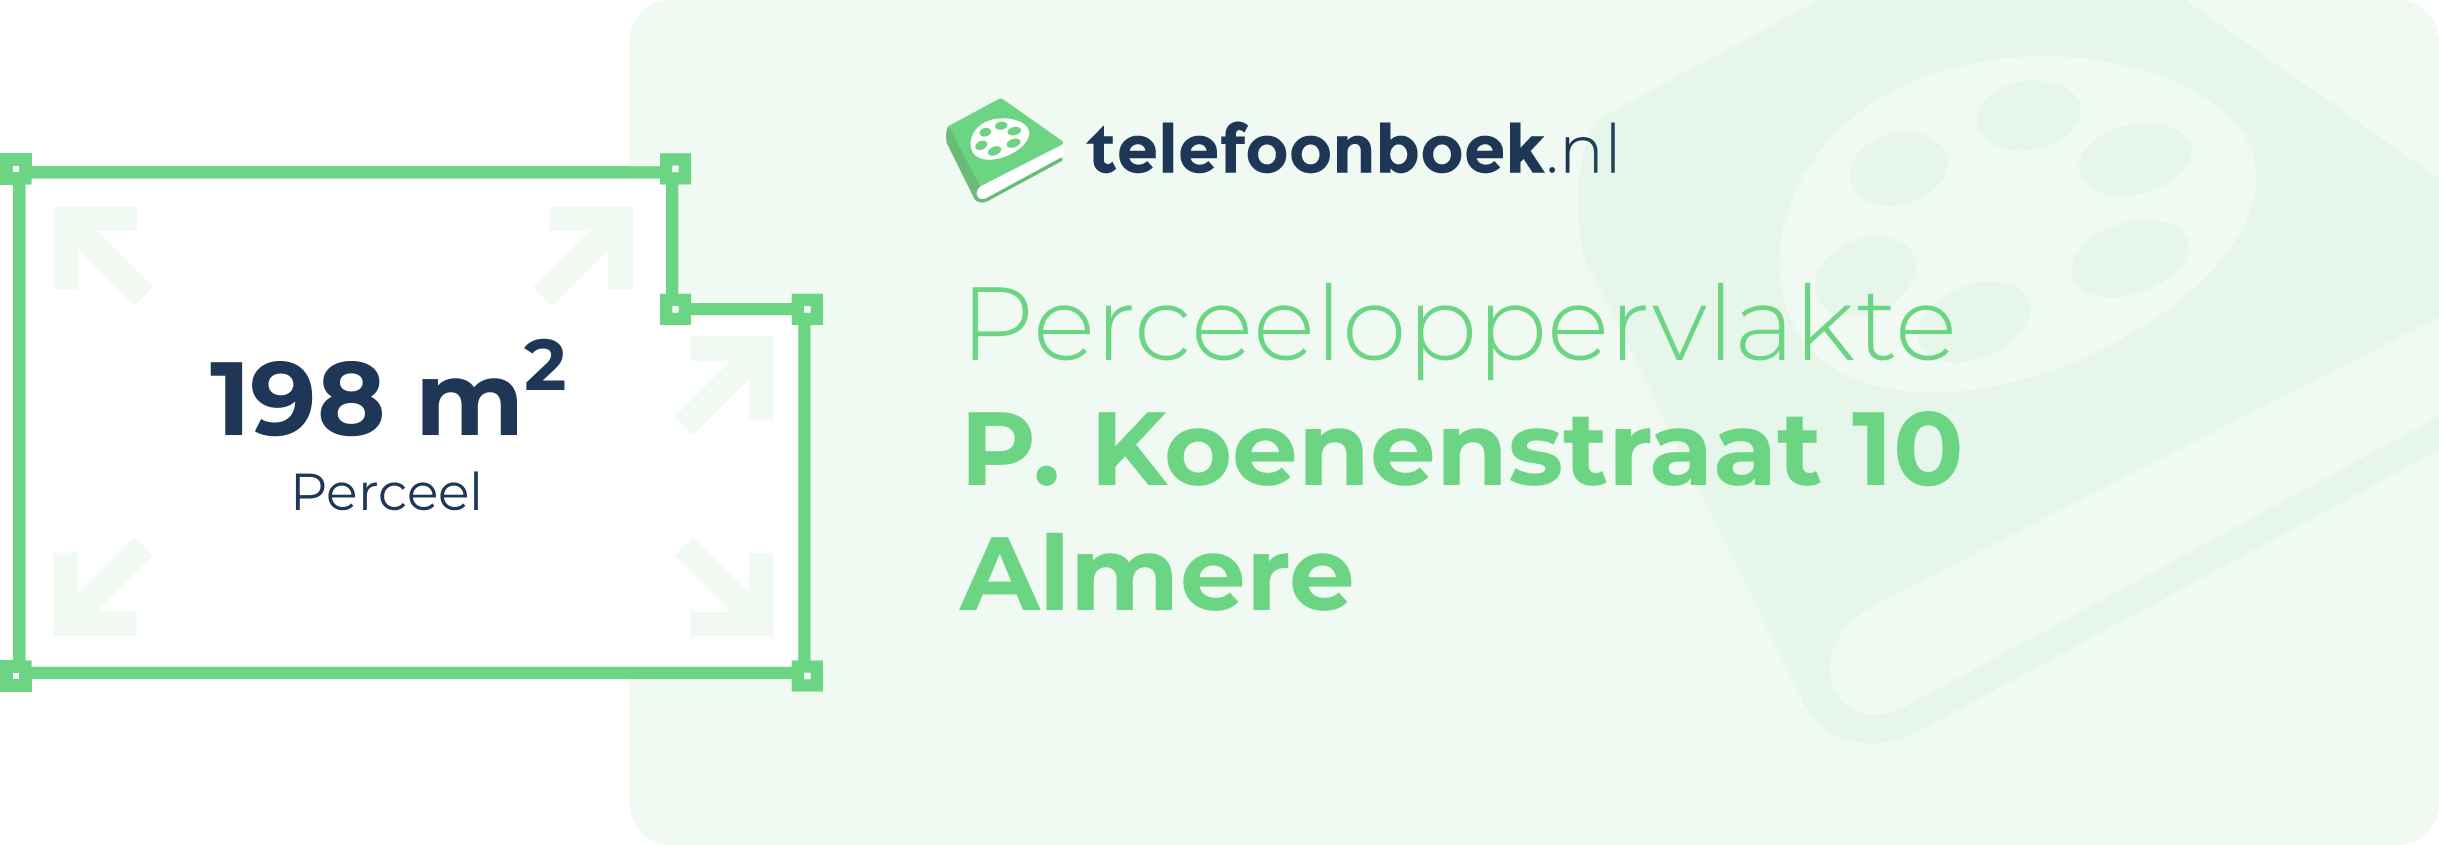 Perceeloppervlakte P. Koenenstraat 10 Almere